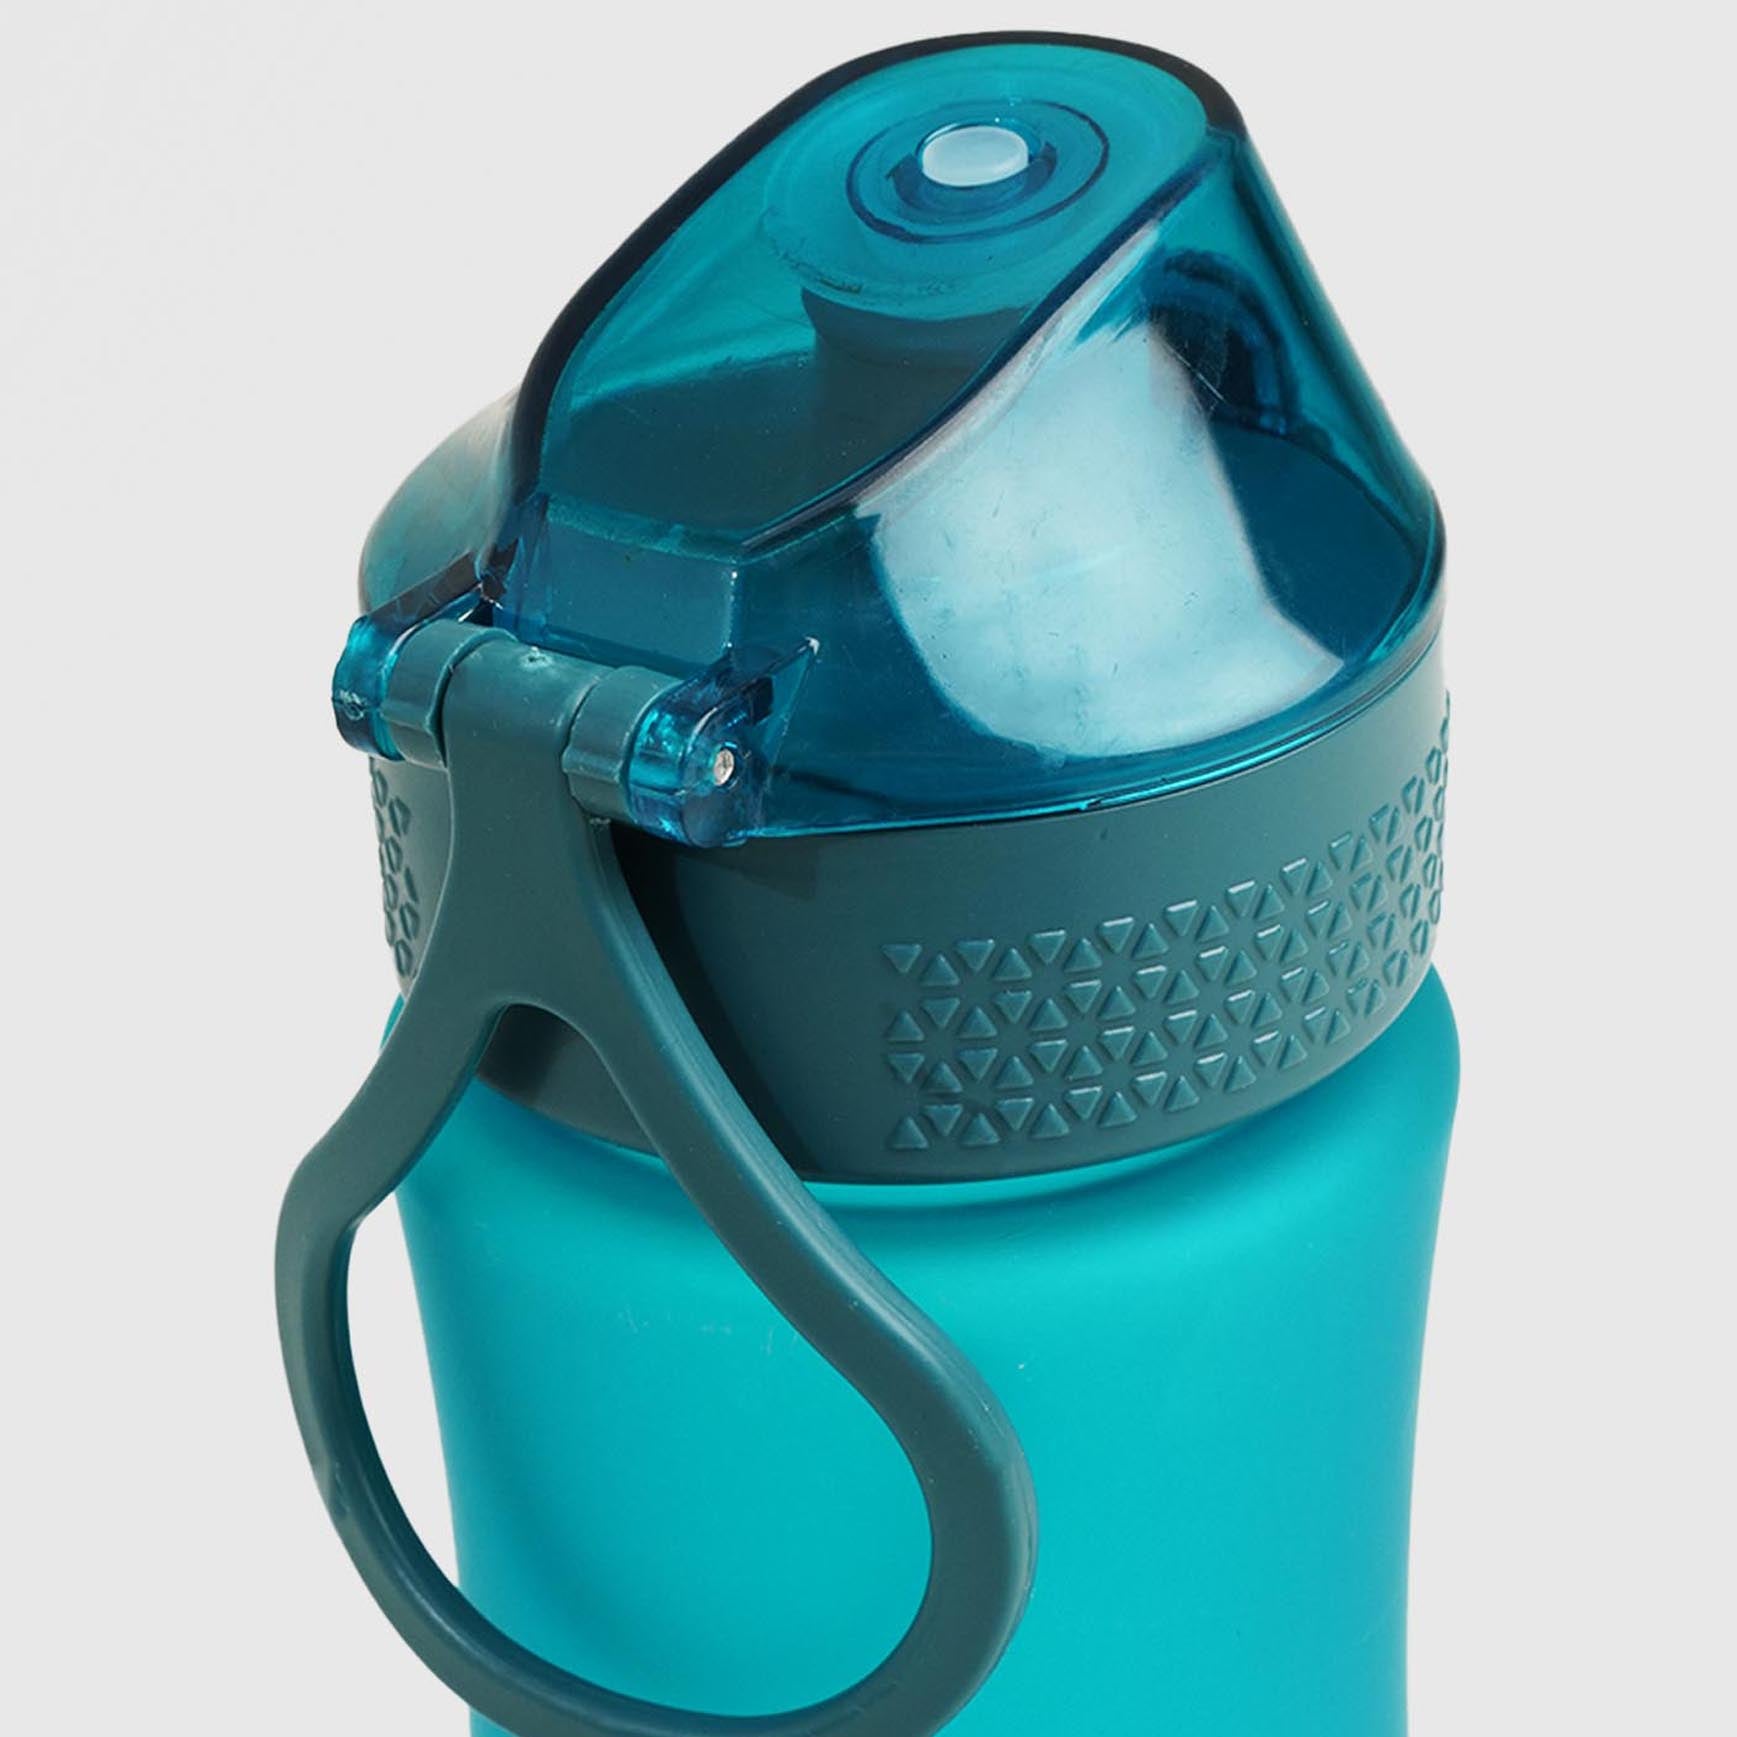 Curved Sports Bottle 800ml (Aqua Blue)